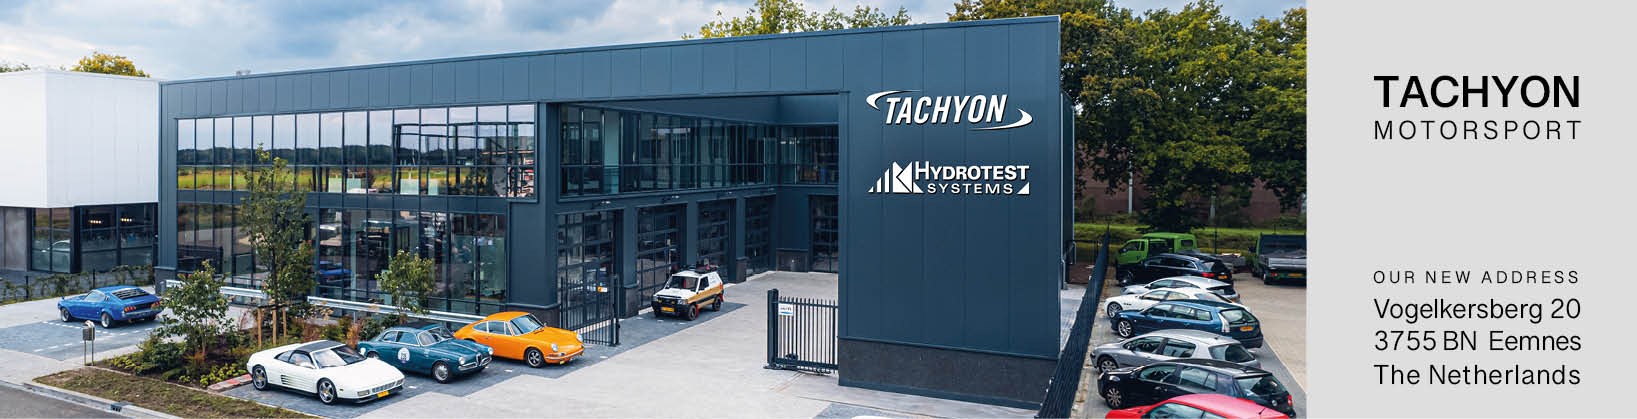 Tachyon Motorsport